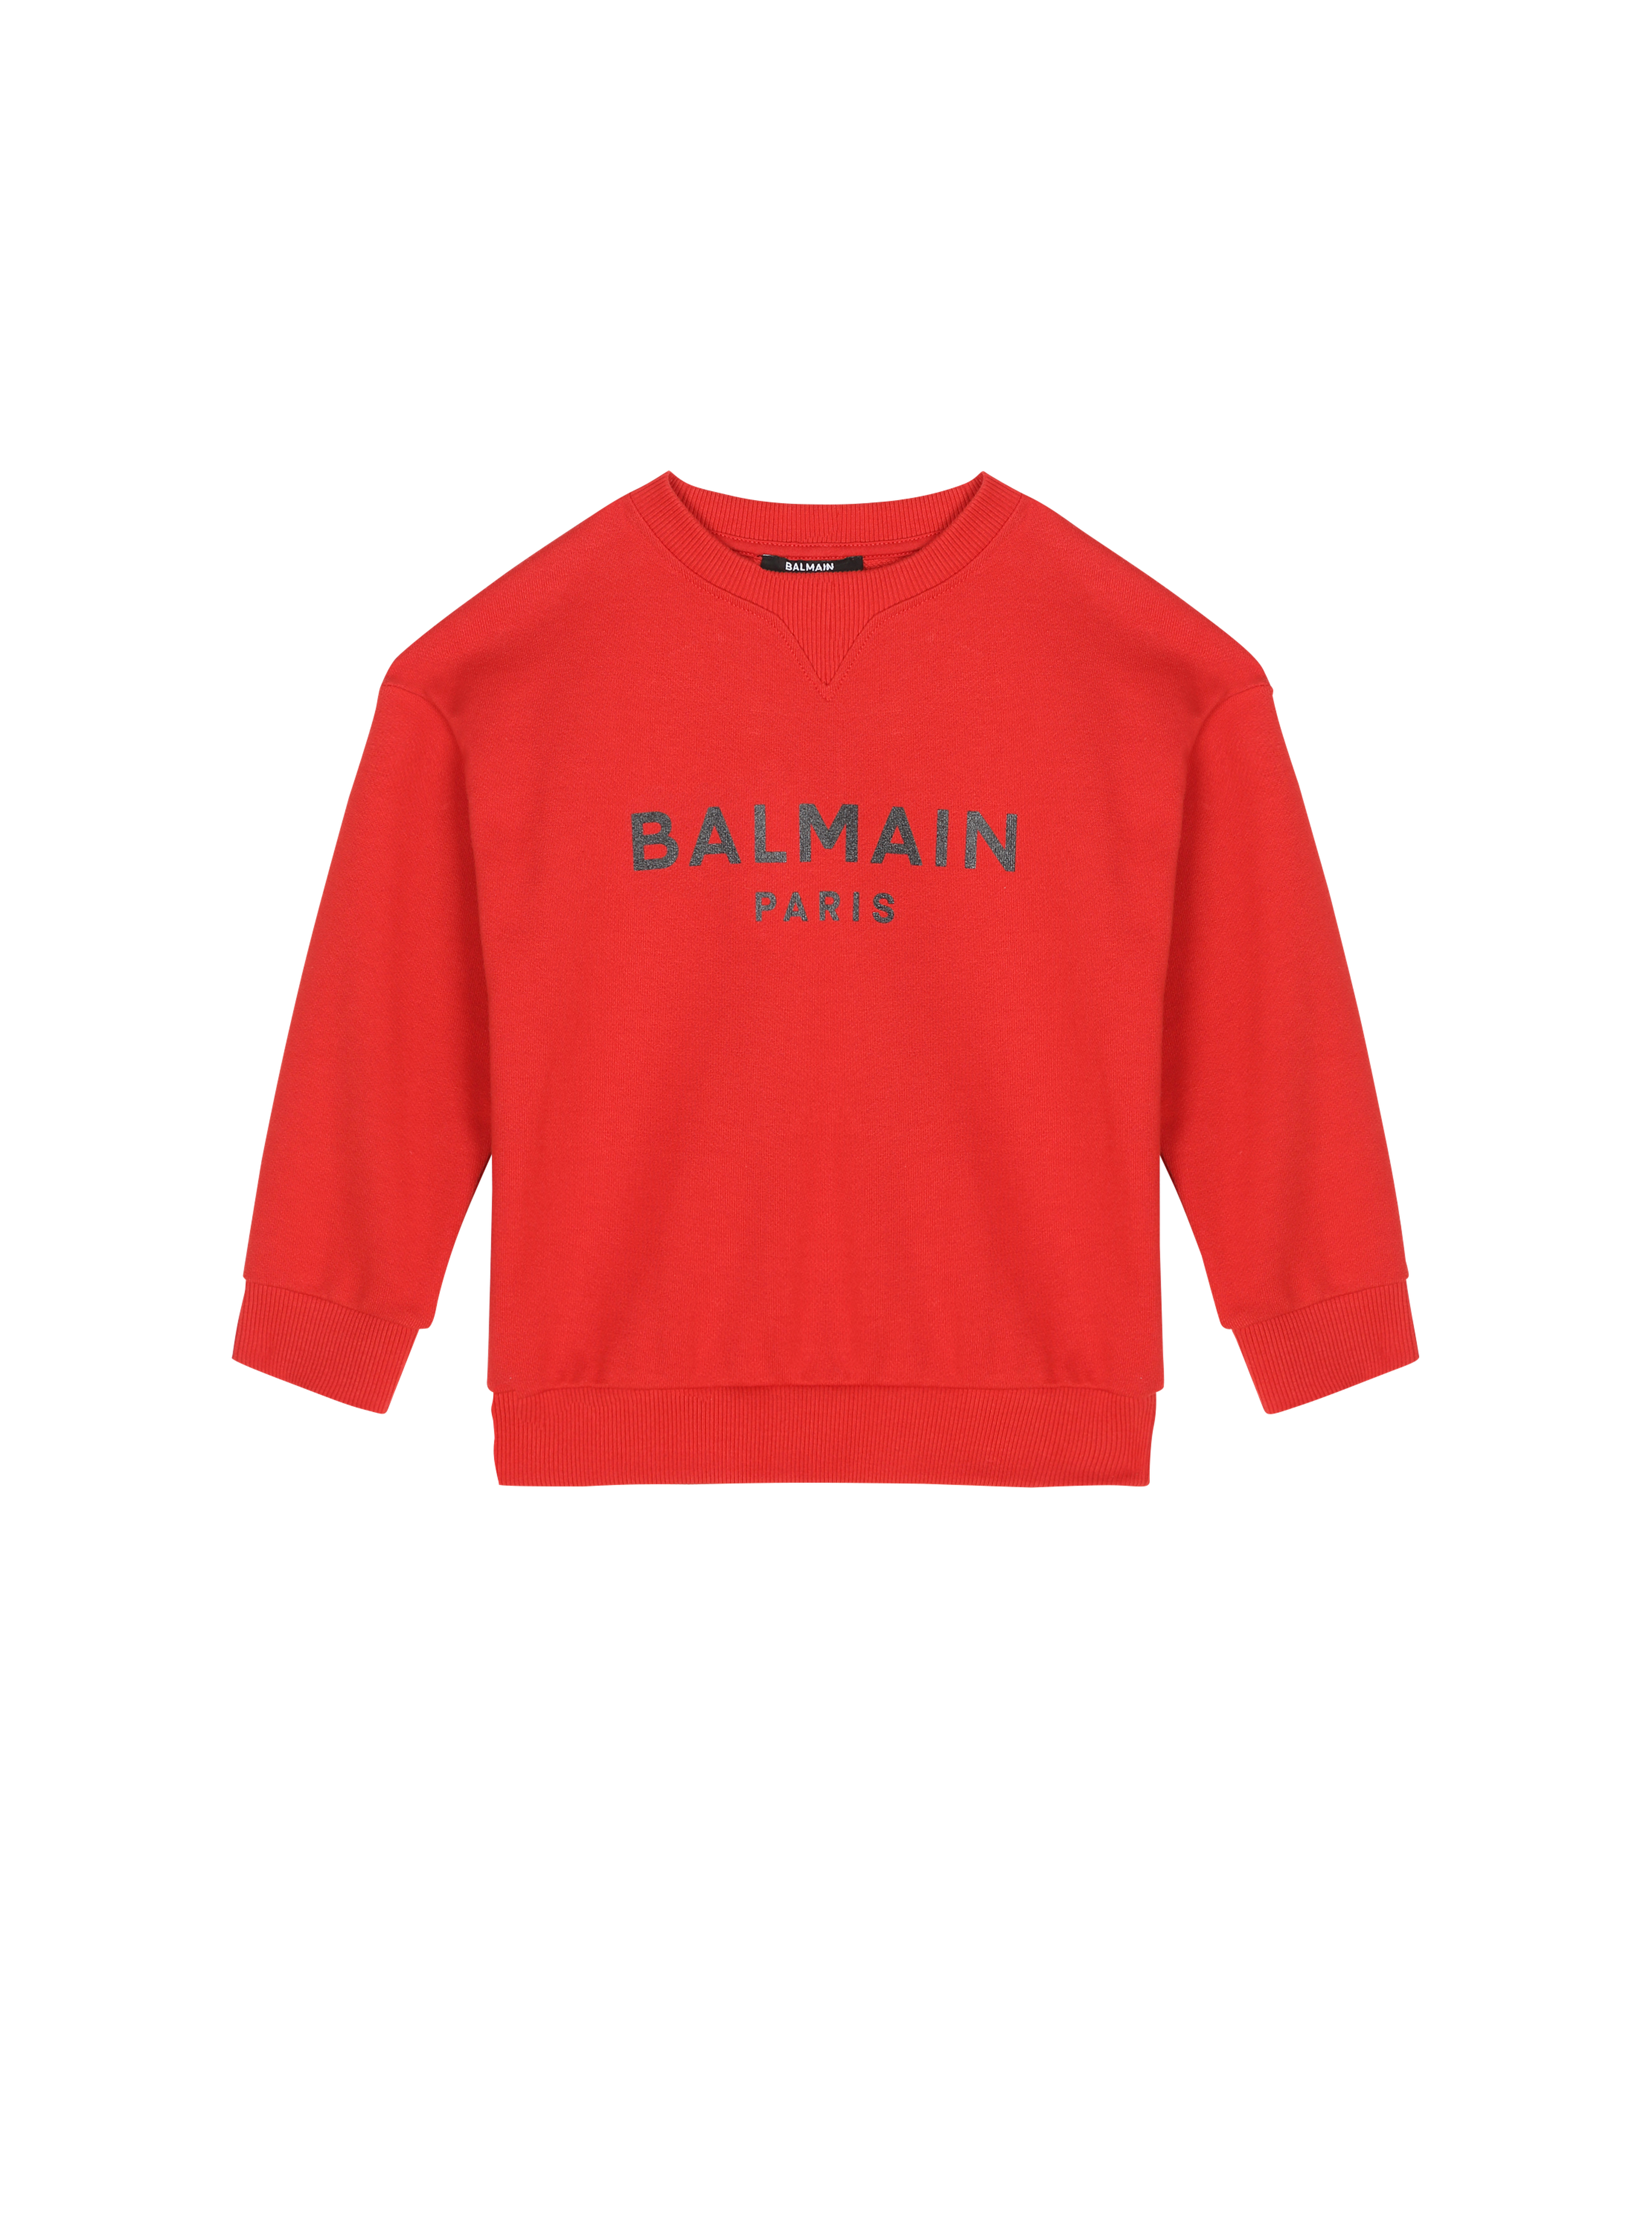 Cotton jumper with Balmain logo, red